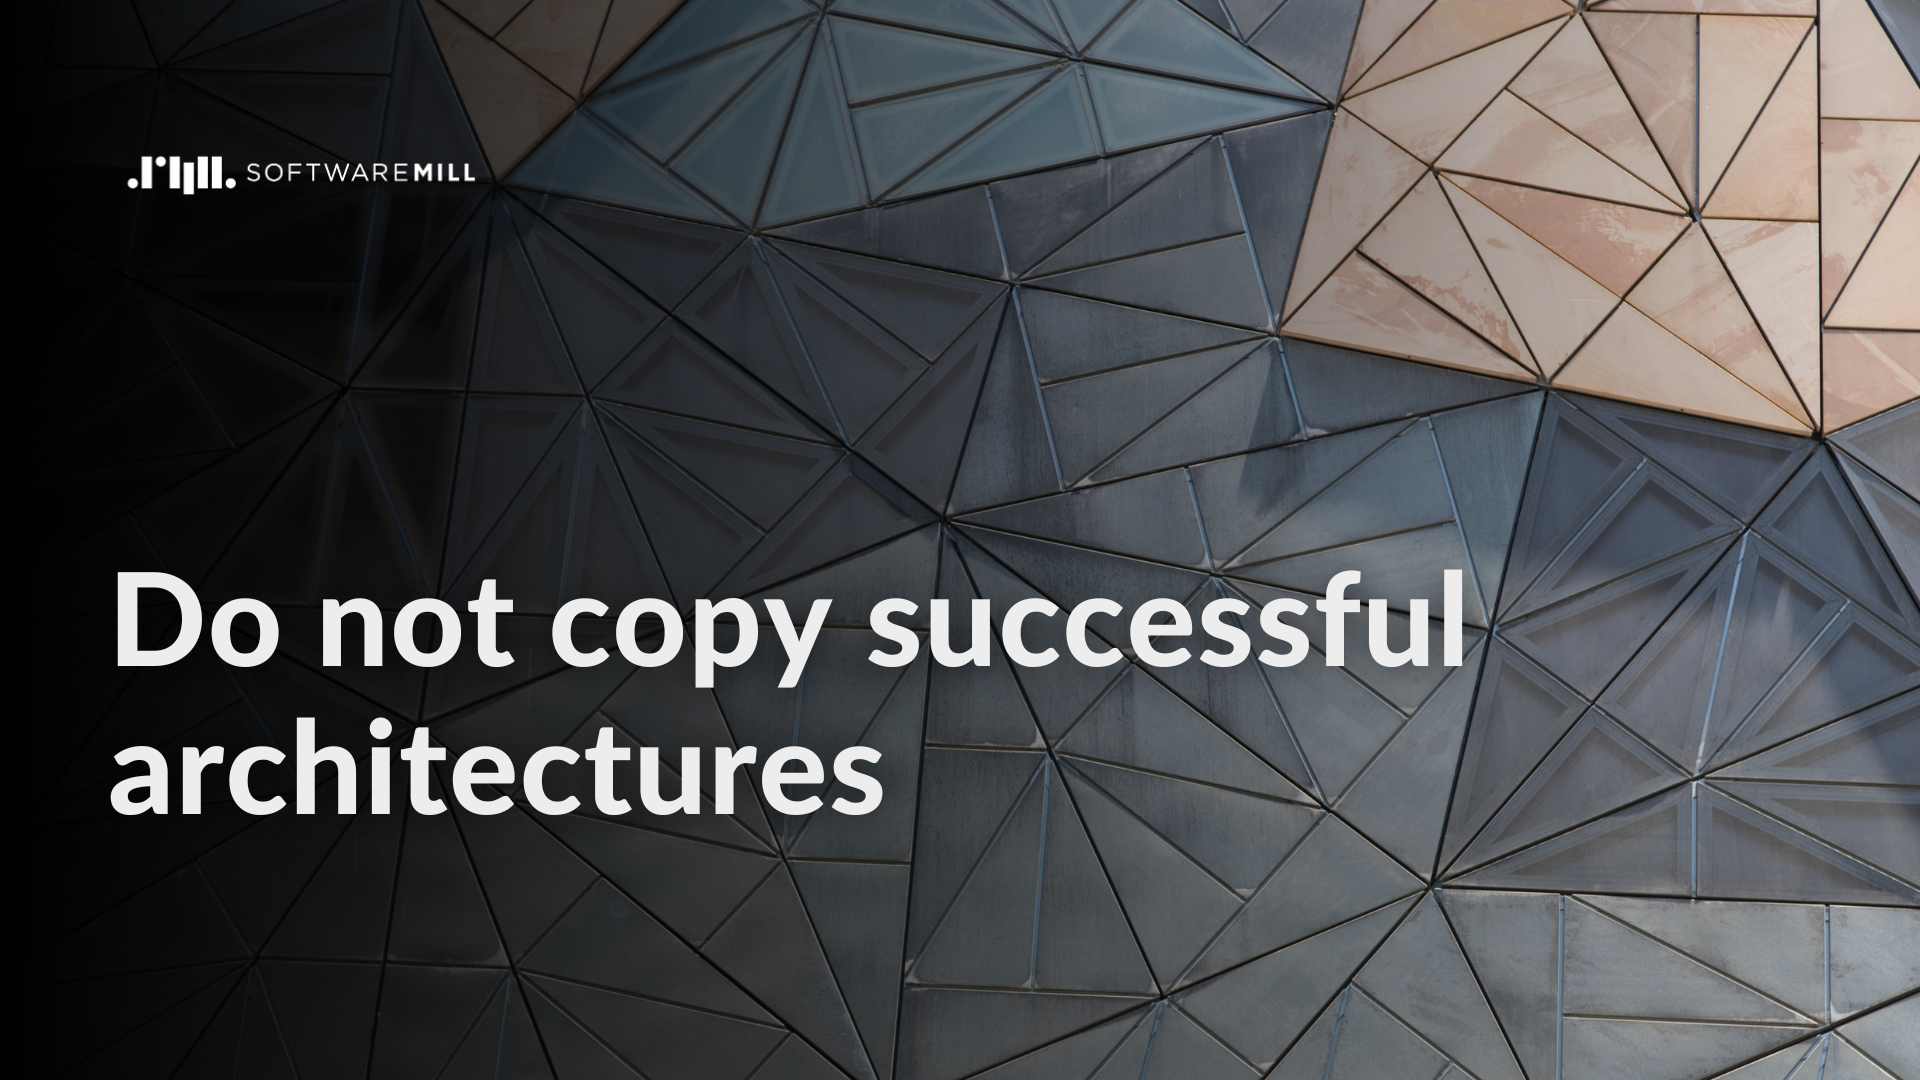 Do not copy successful architectures webp image